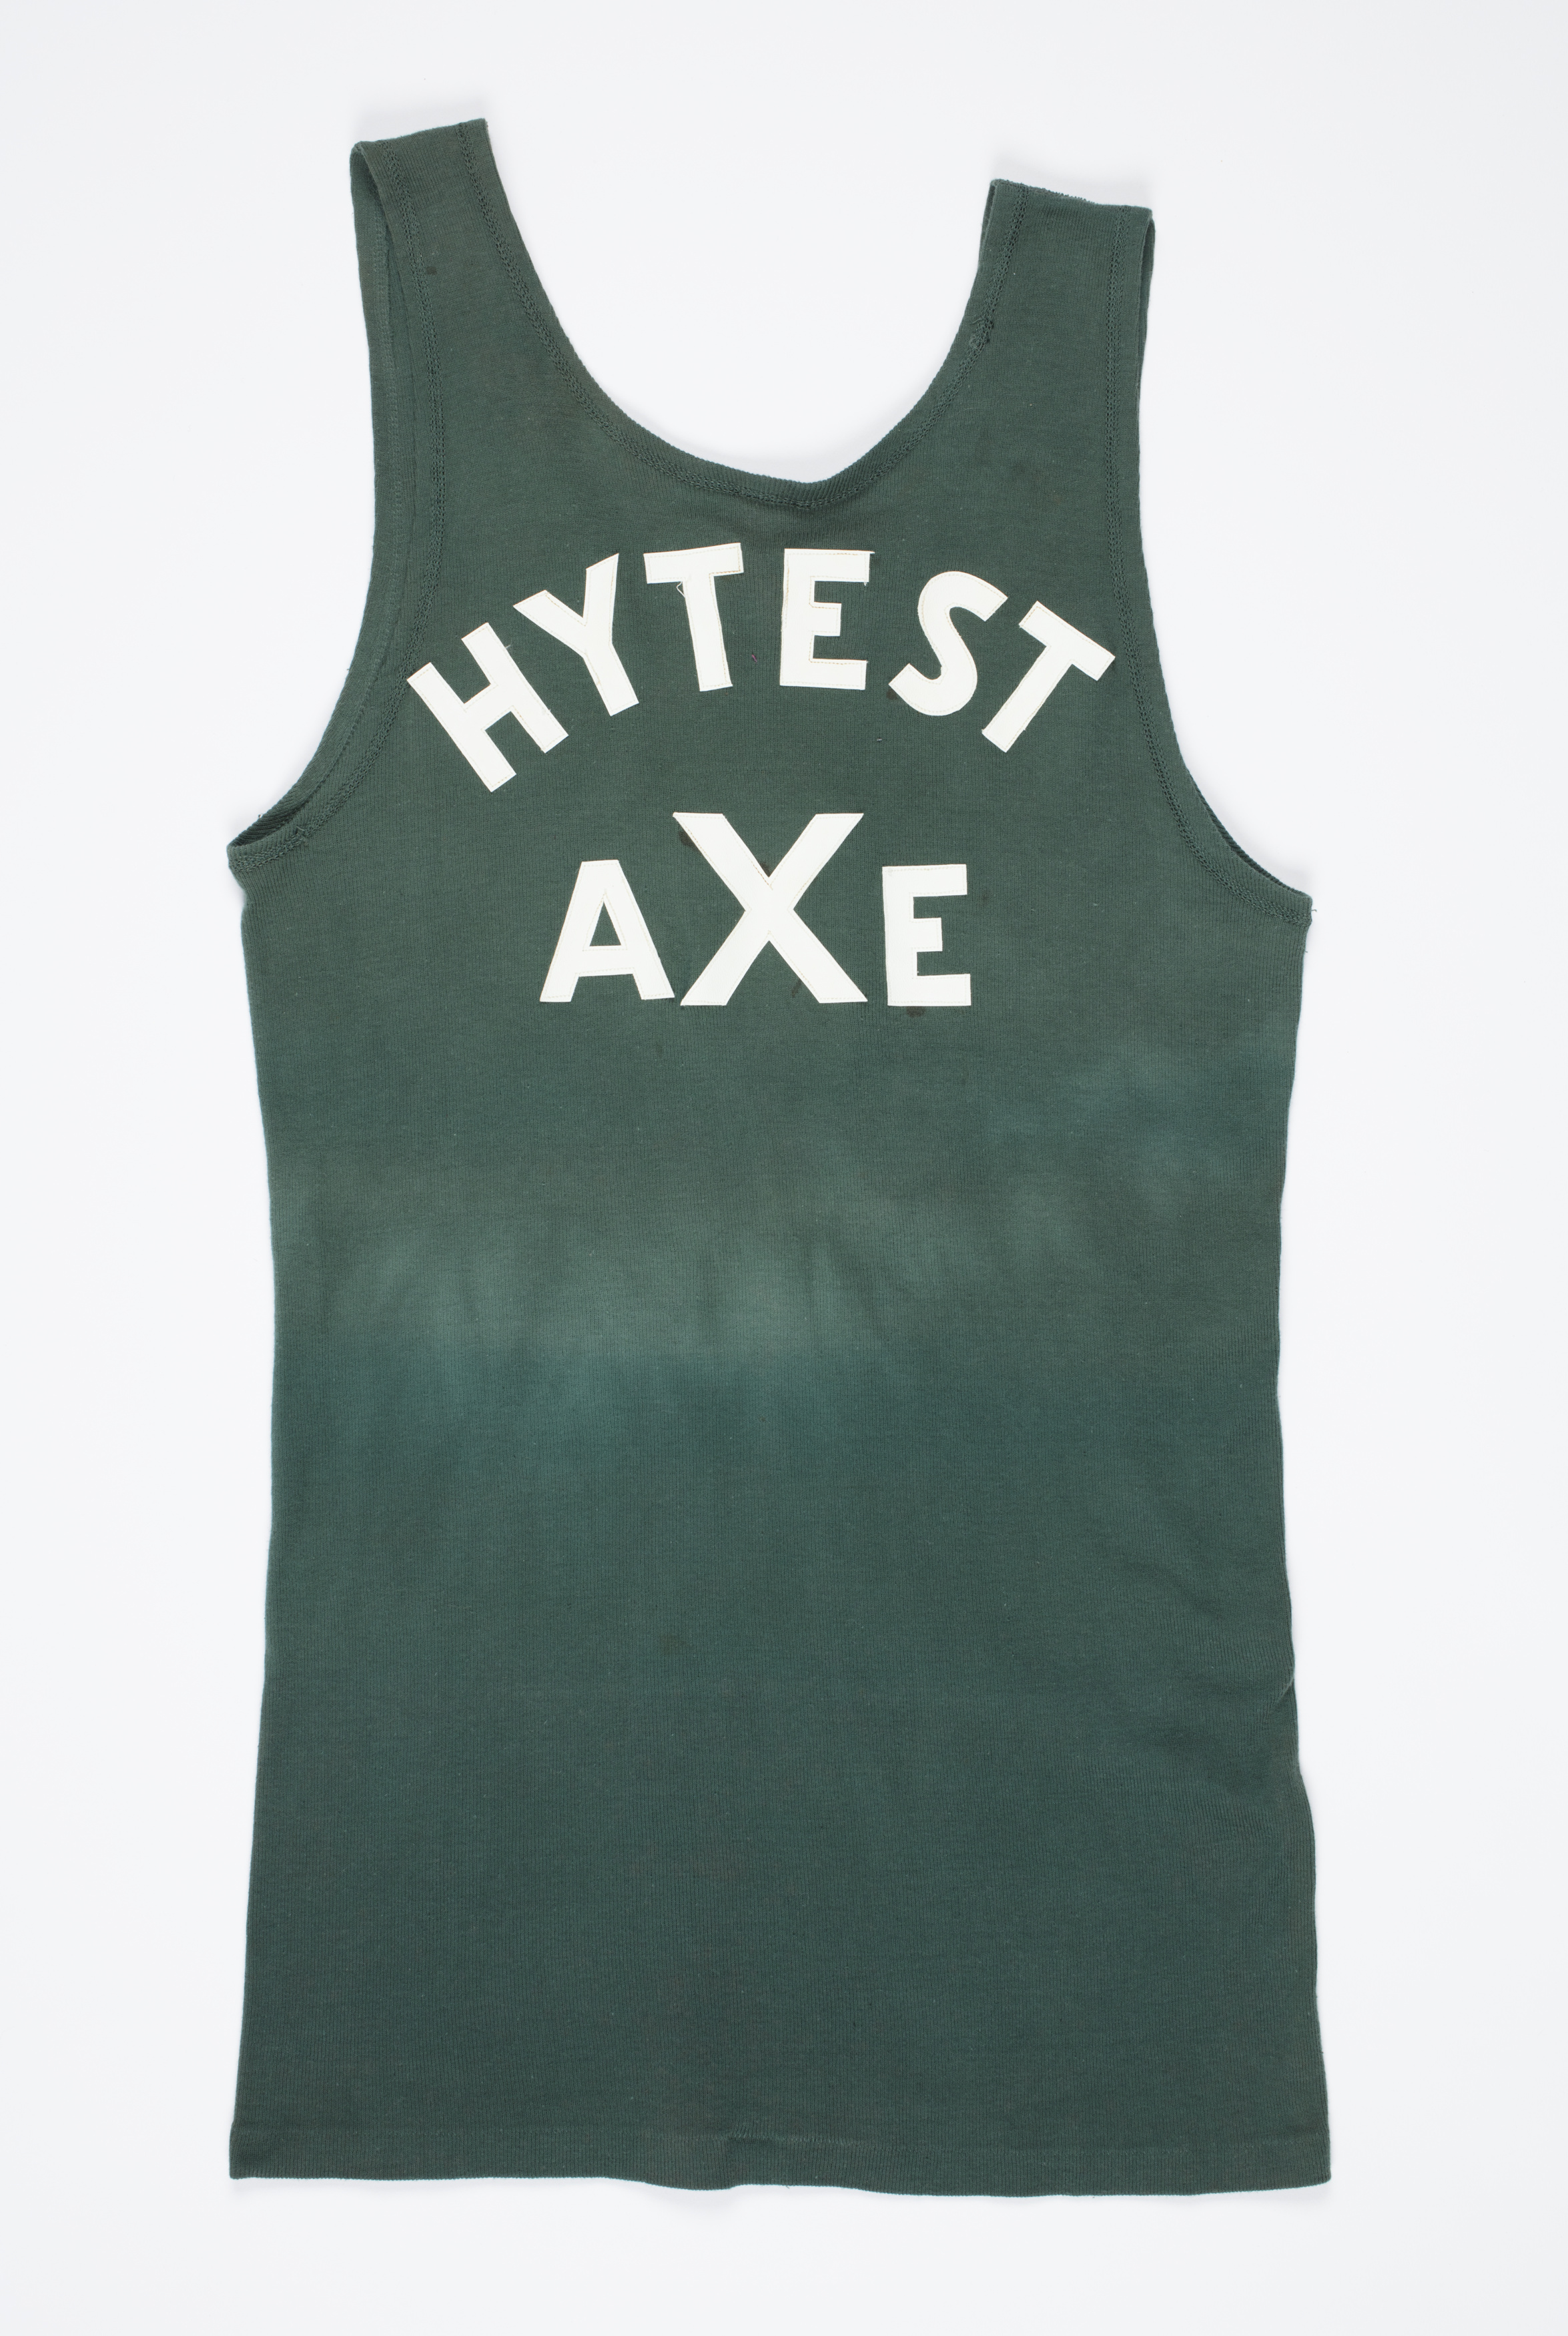 'HYTEST AXE' singlet worn by champion axeman Tom Kirk